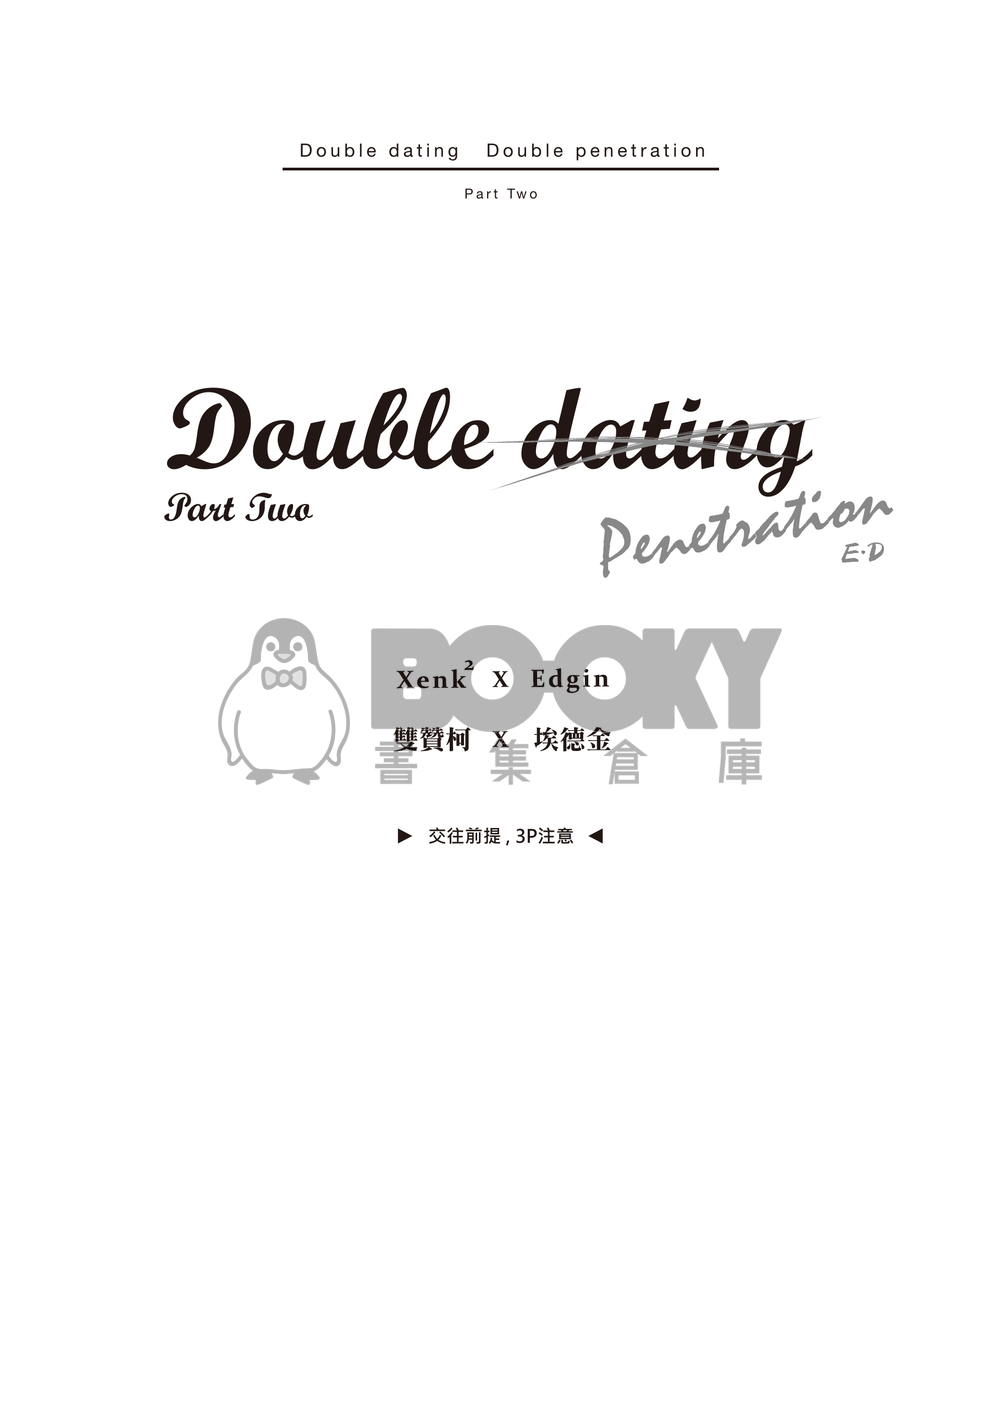 【龍與地下城】double dating double penetration 下集 試閱圖片